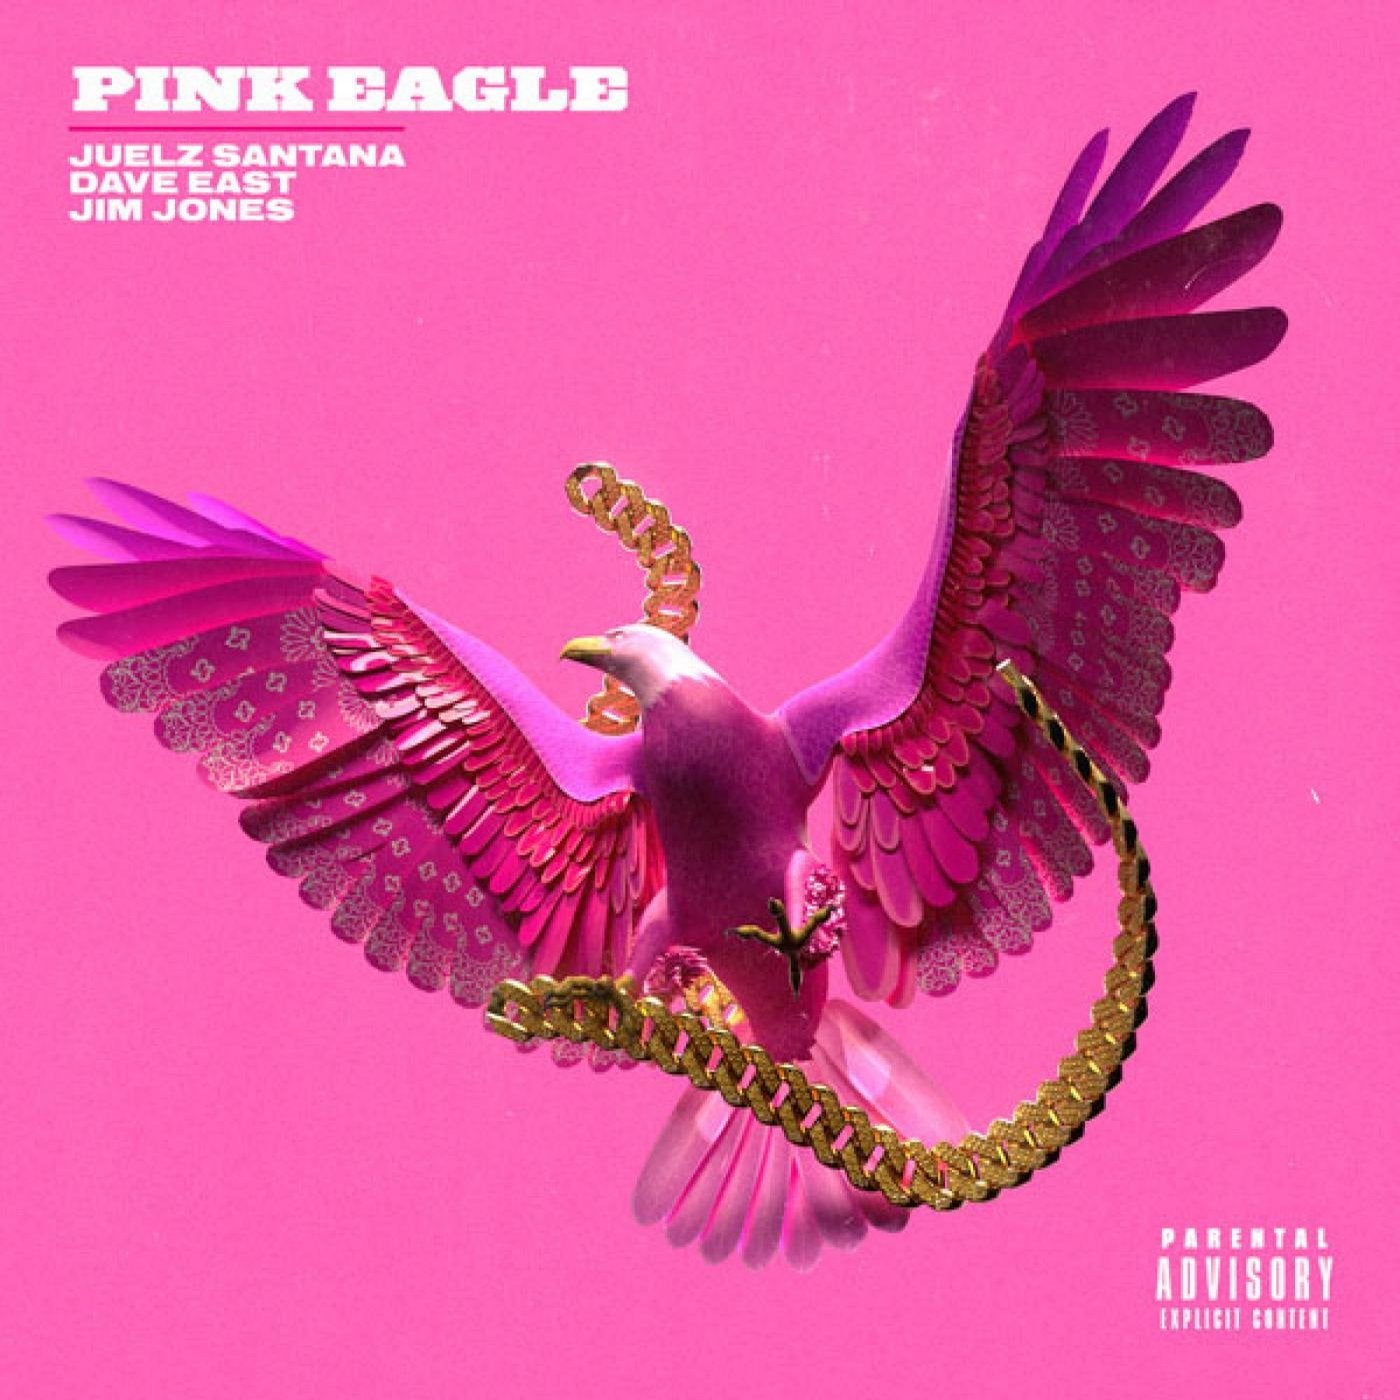 Pink Eagle (feat. Dave East, Jim Jones)